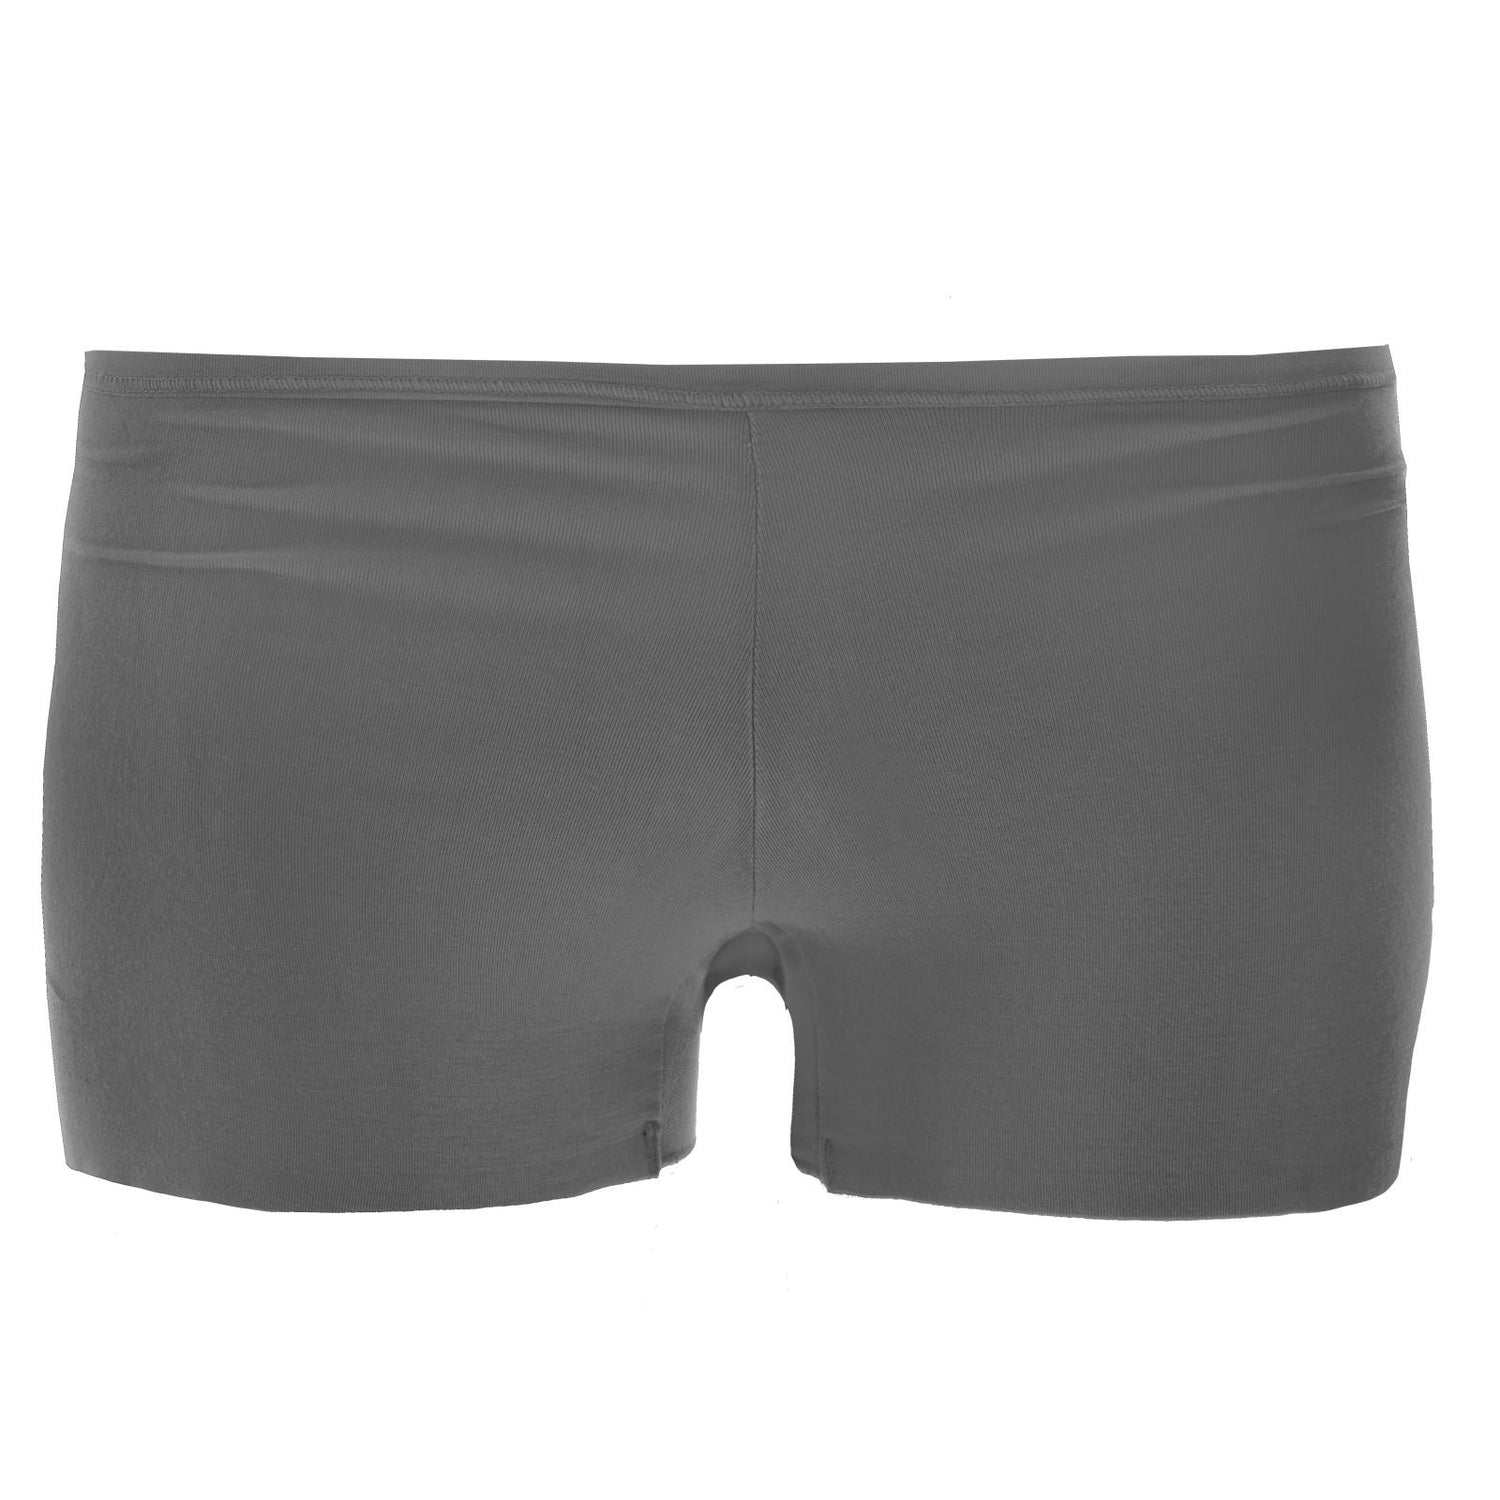 Women's Boy Short Underwear in Pewter